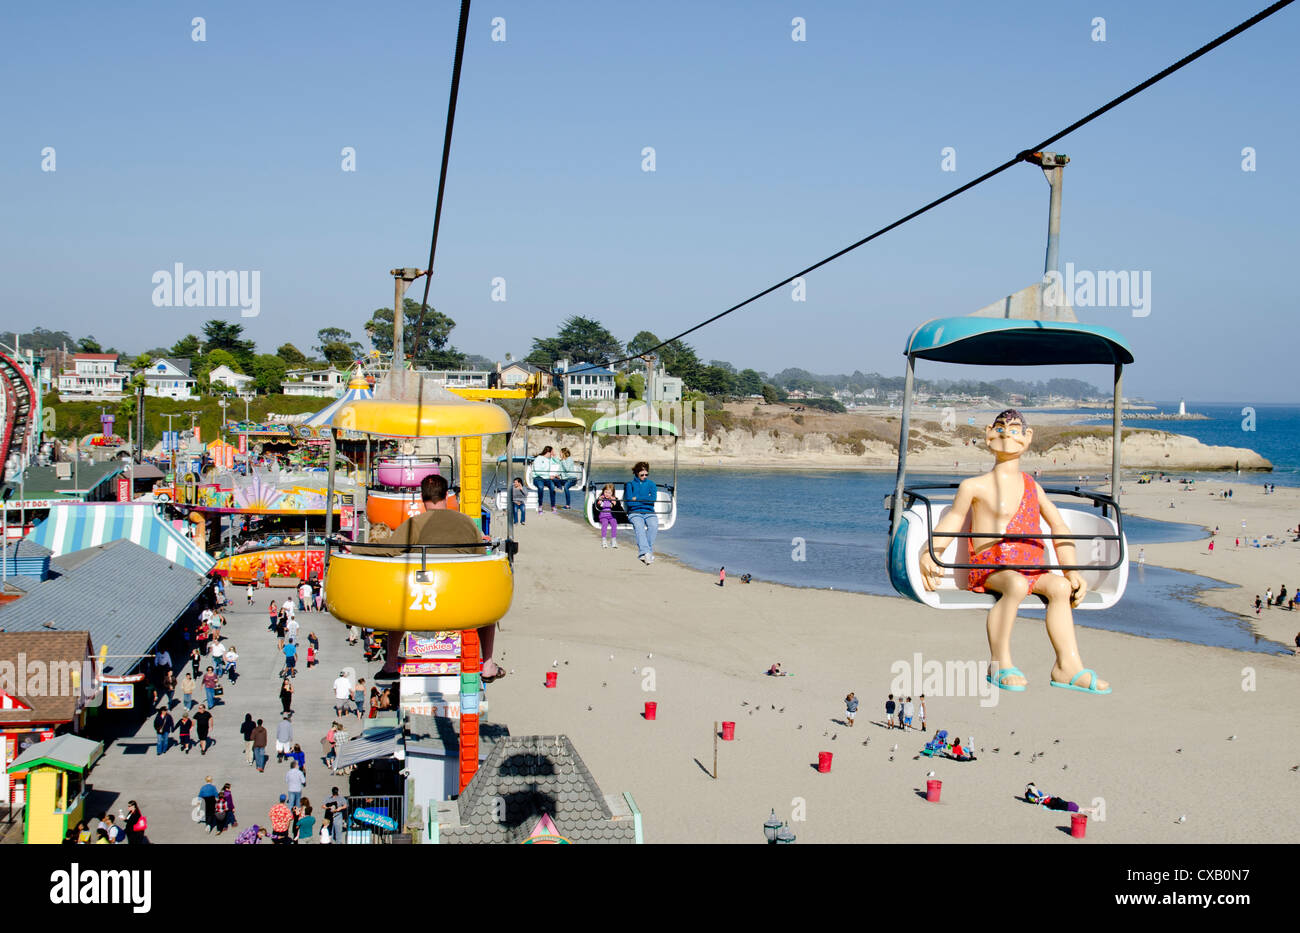 Fairground rides and crowds on Santa Cruz boardwalk, California Stock Photo